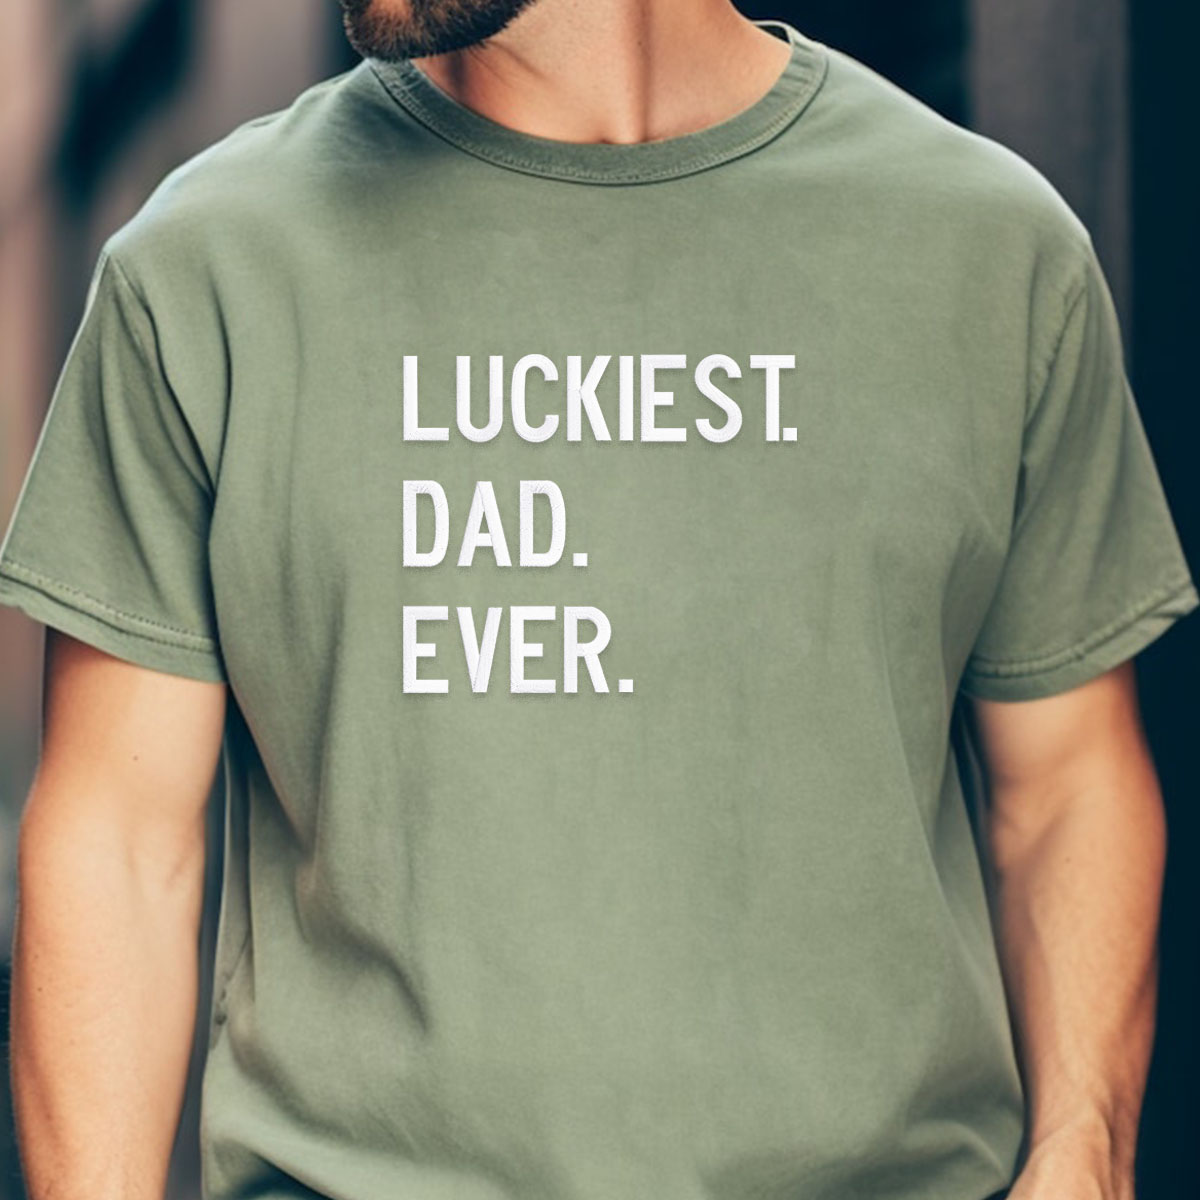 luckiest dad ever shirt